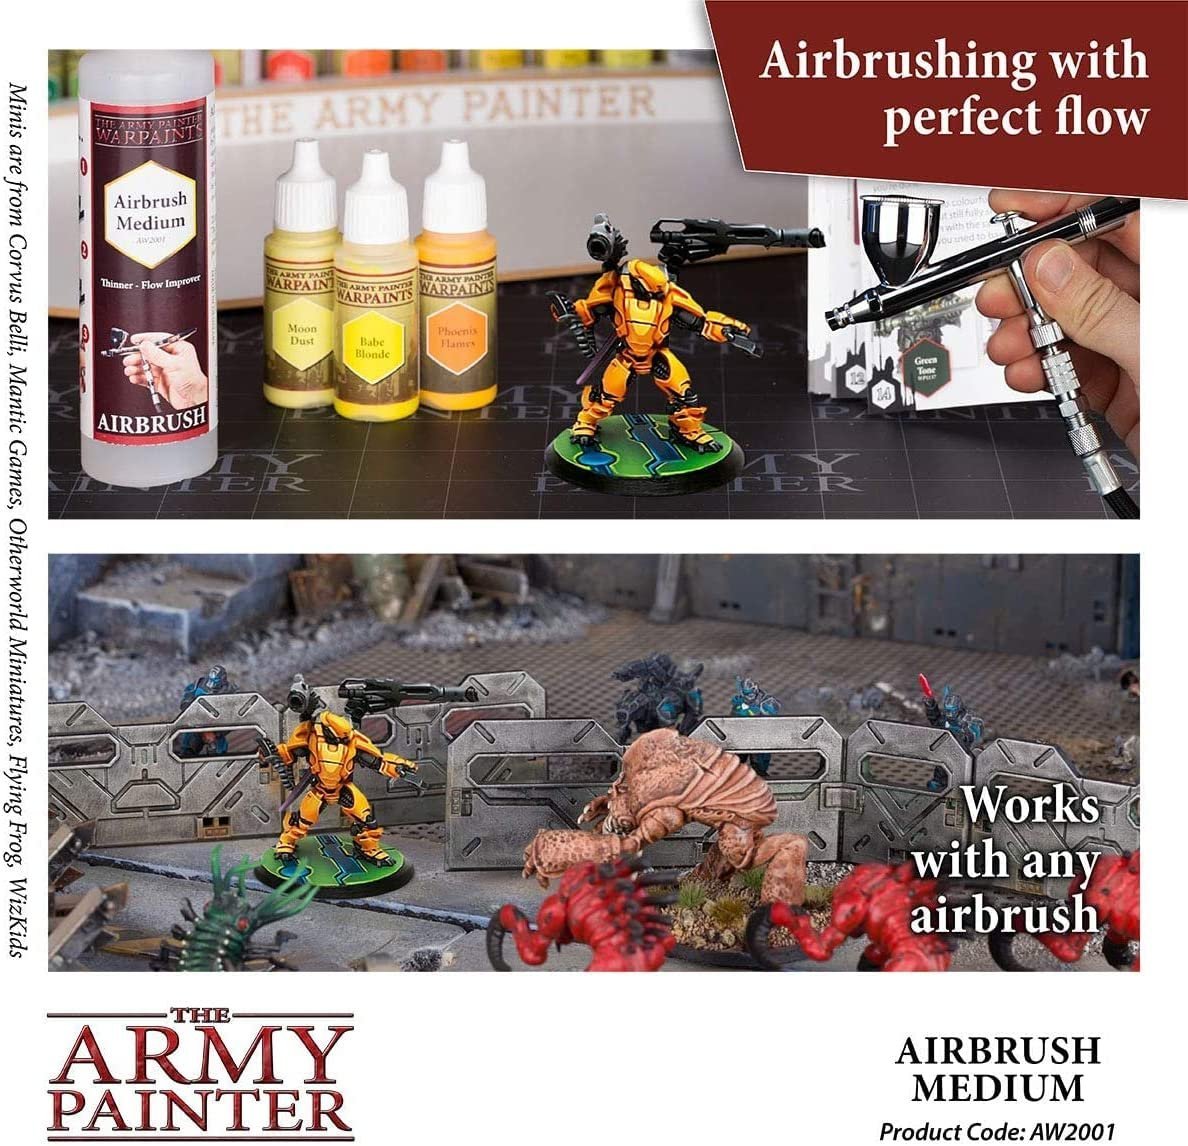 The Army Painter - Warpaints Air Starter Set